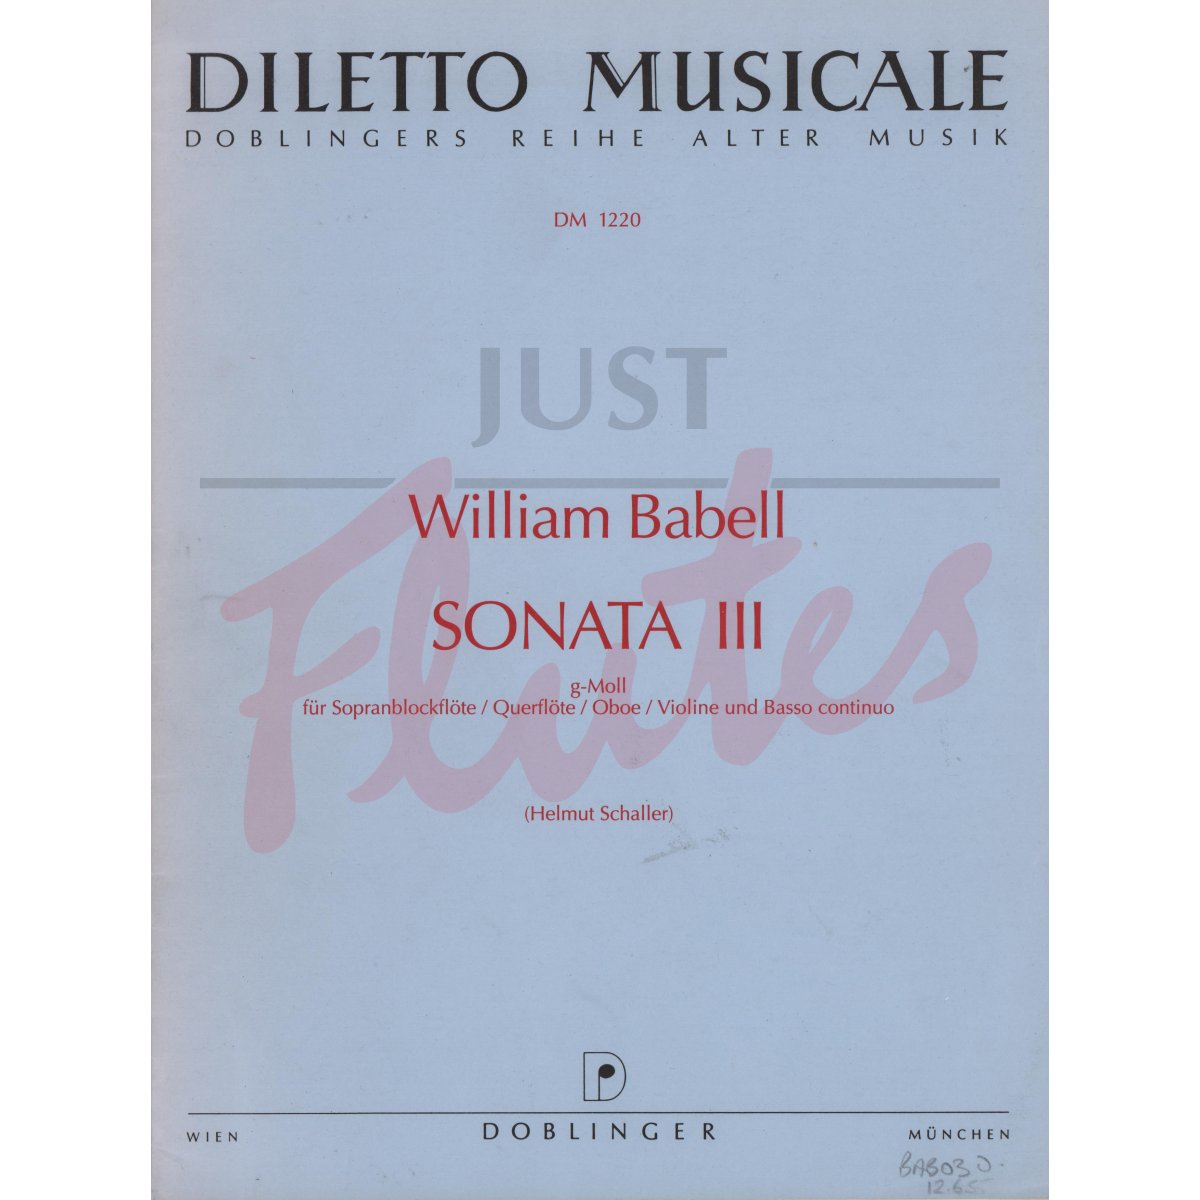 Sonata No 3 in G minor for Recorder or Flute and Continuo